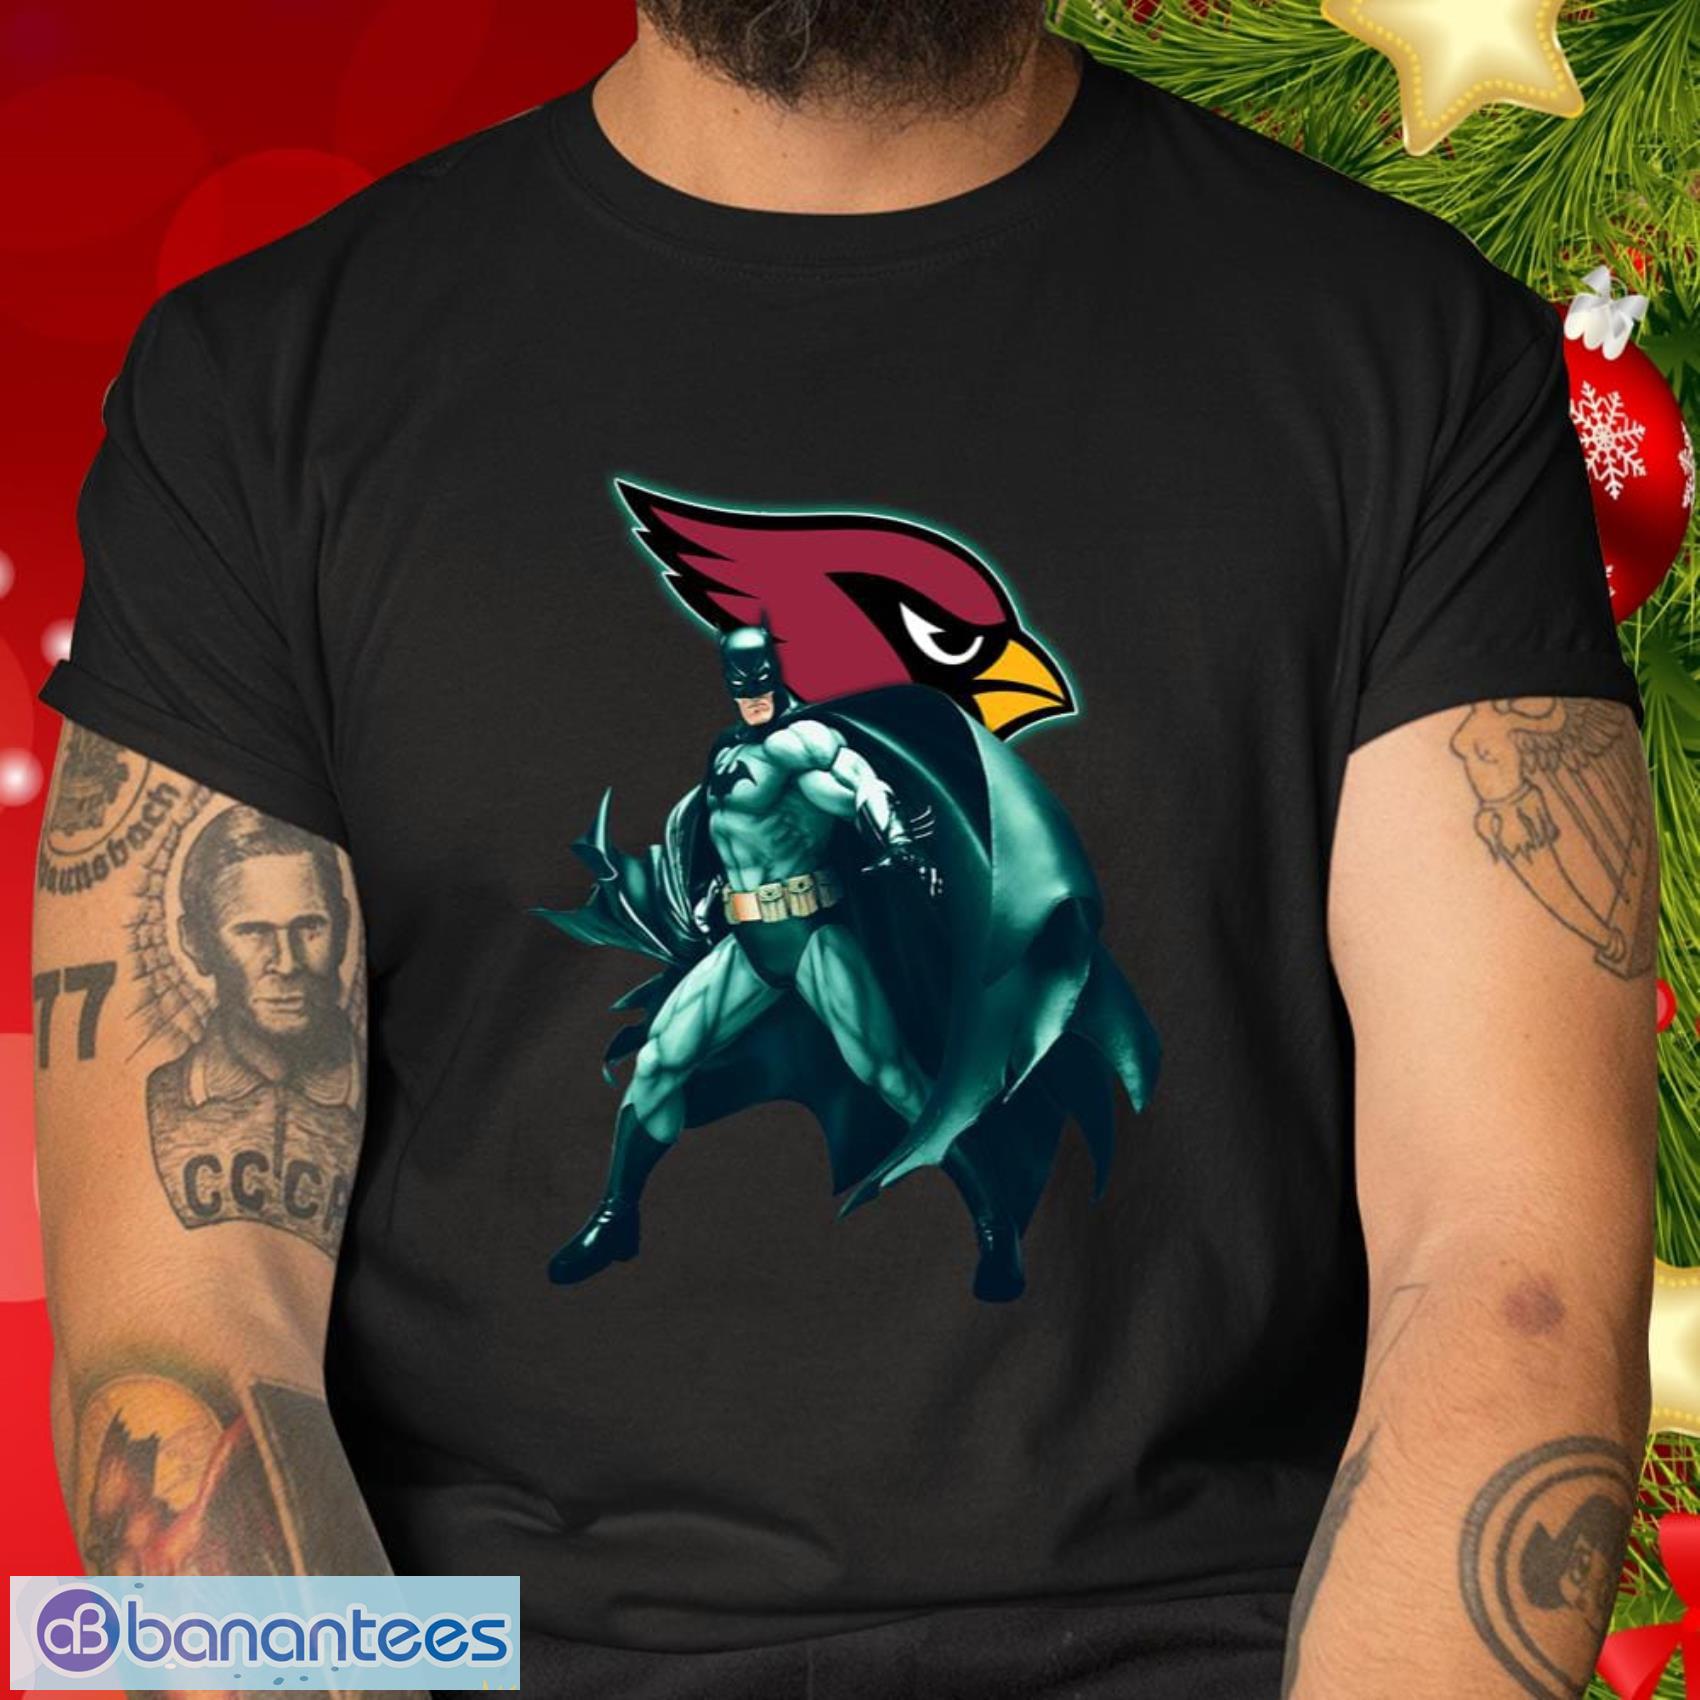 Arizona-Cardinals Batman Dc T Shirt Gift For Sport Teams Fans - Arizona-Cardinals Batman Dc T Shirt_2